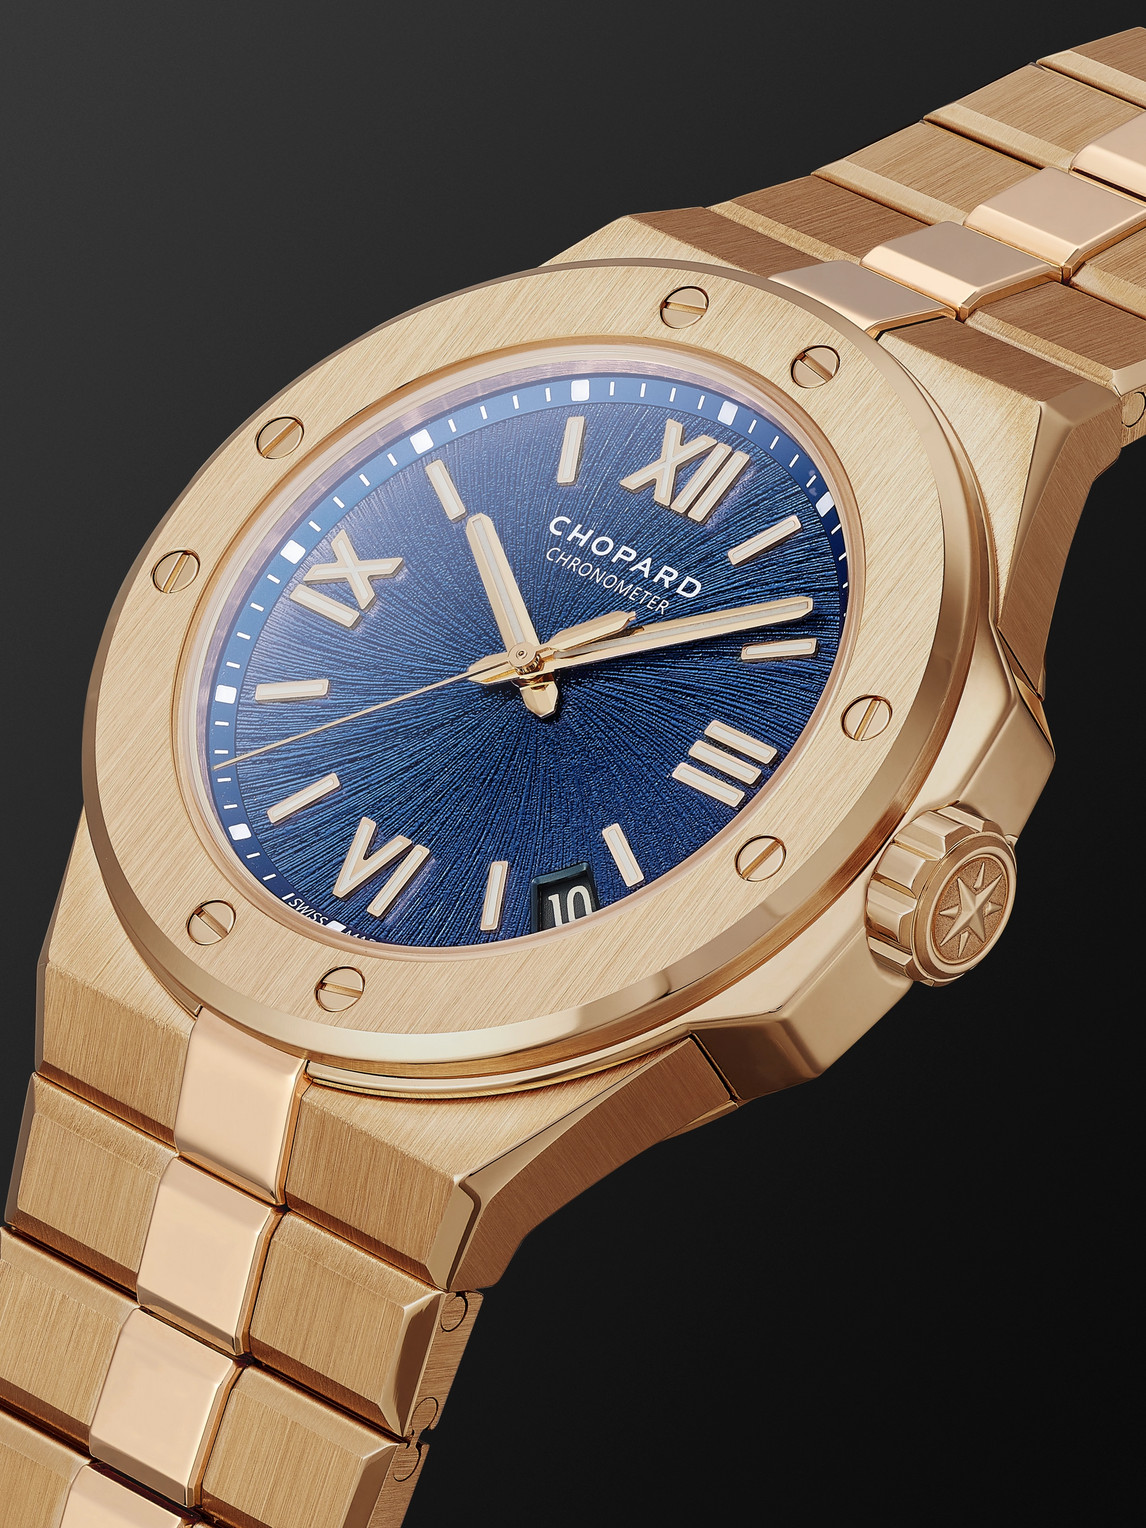  Chopard - Alpine Eagle Large Automatic 41mm 18-karat Rose Gold Watch, Ref. No. 295363-5001 - Men - Blue 